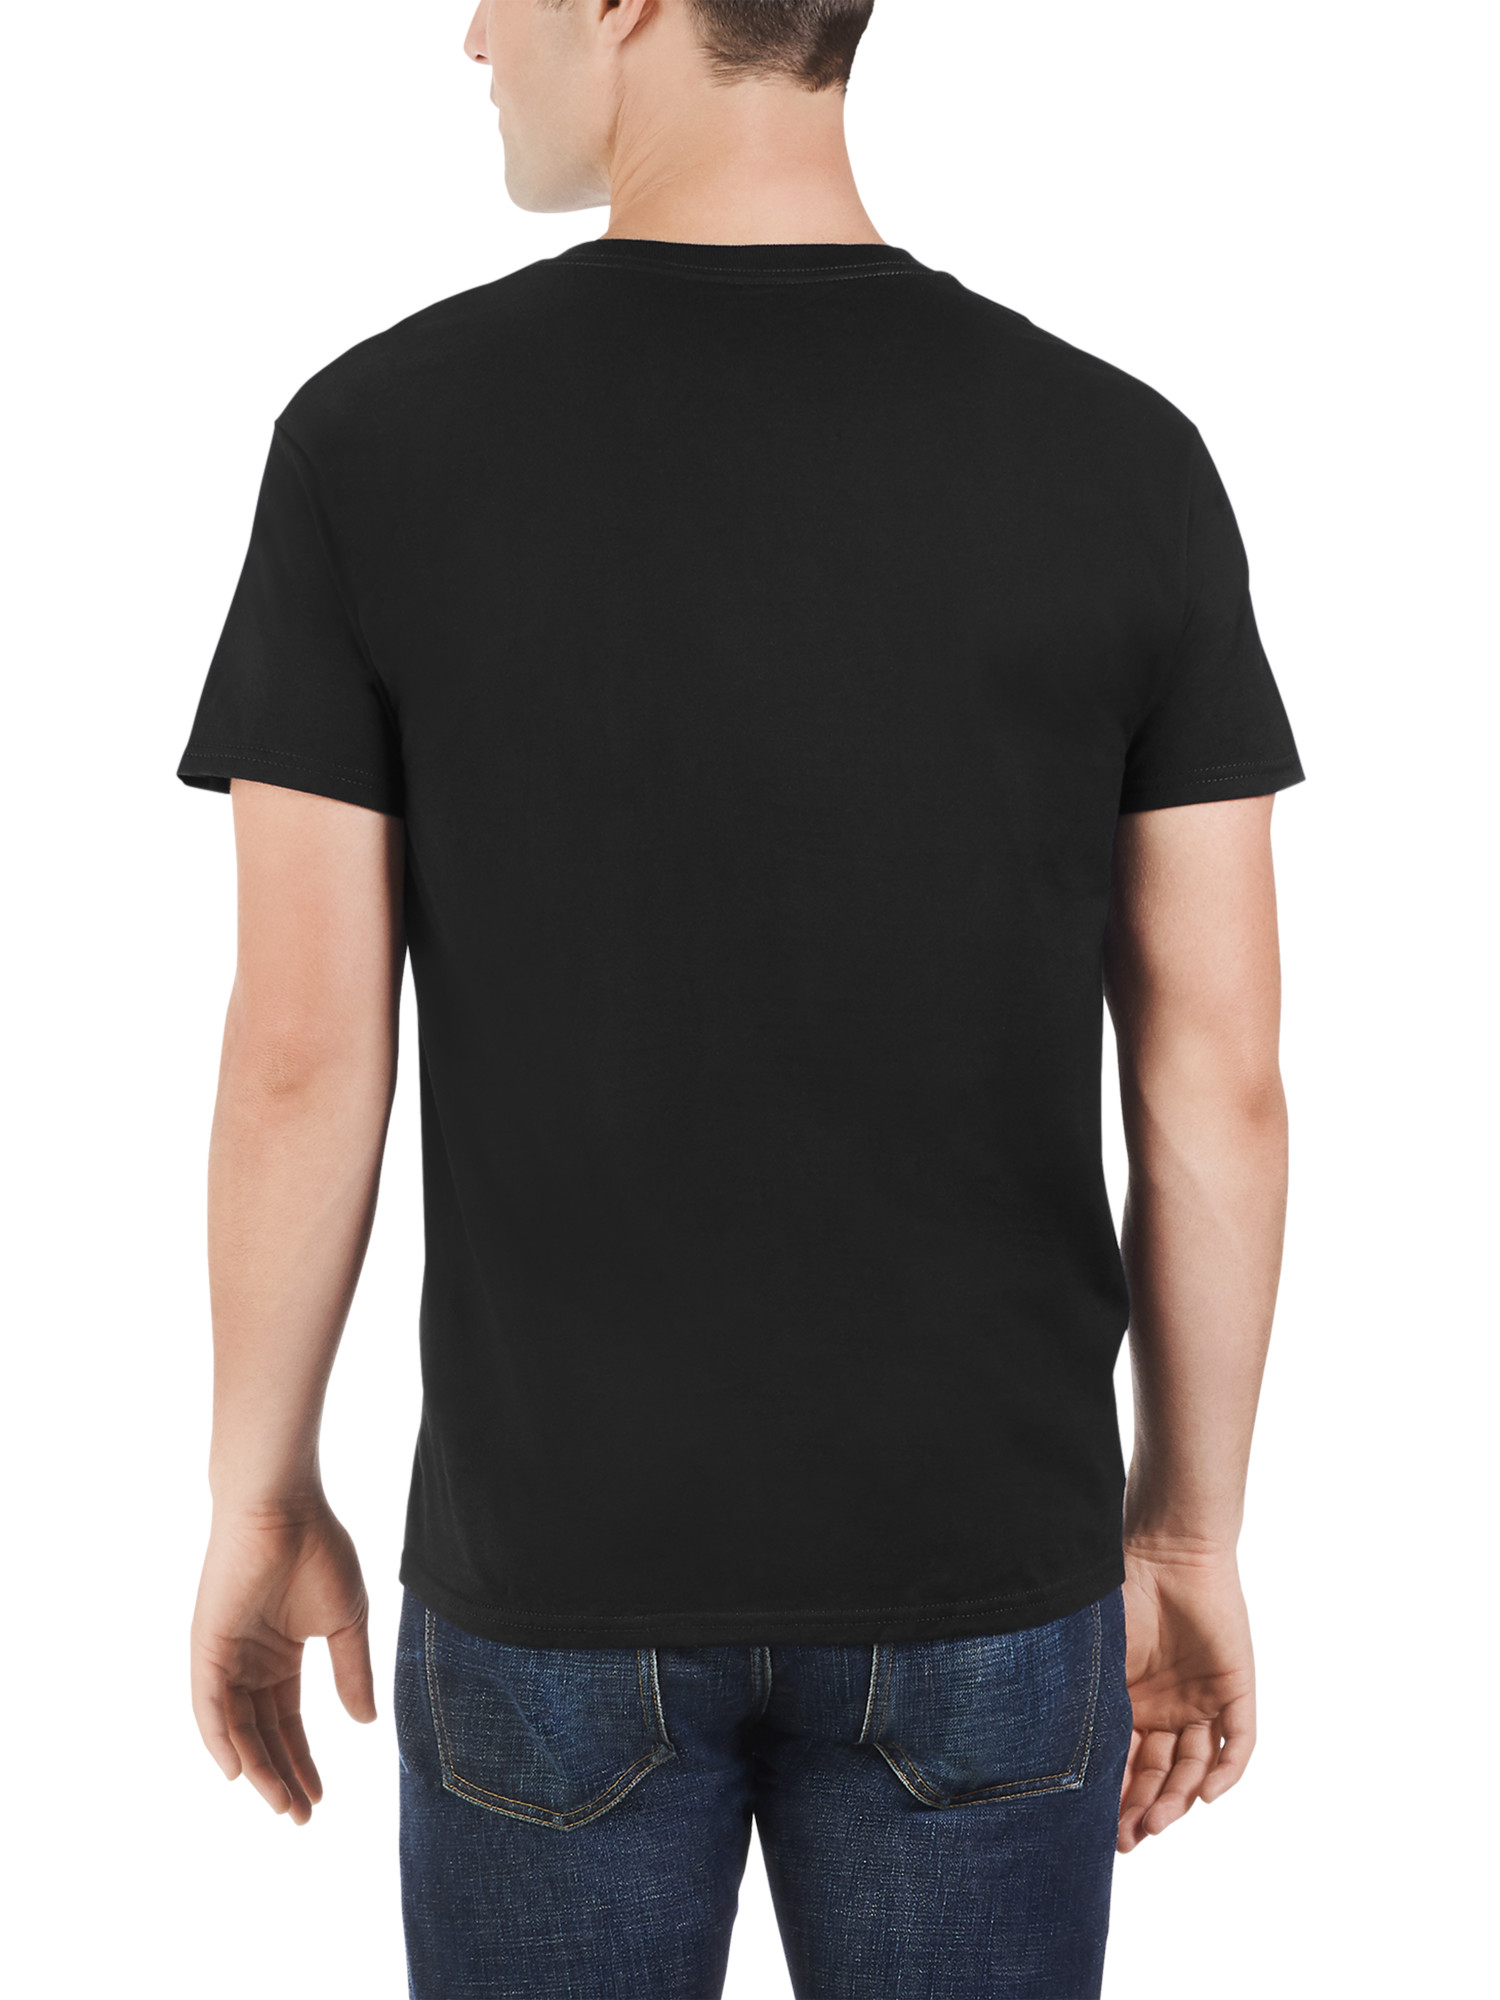 Fruit of the Loom Men's 360 Breathe Pocket T Shirt, Sizes S-4XL - image 3 of 6